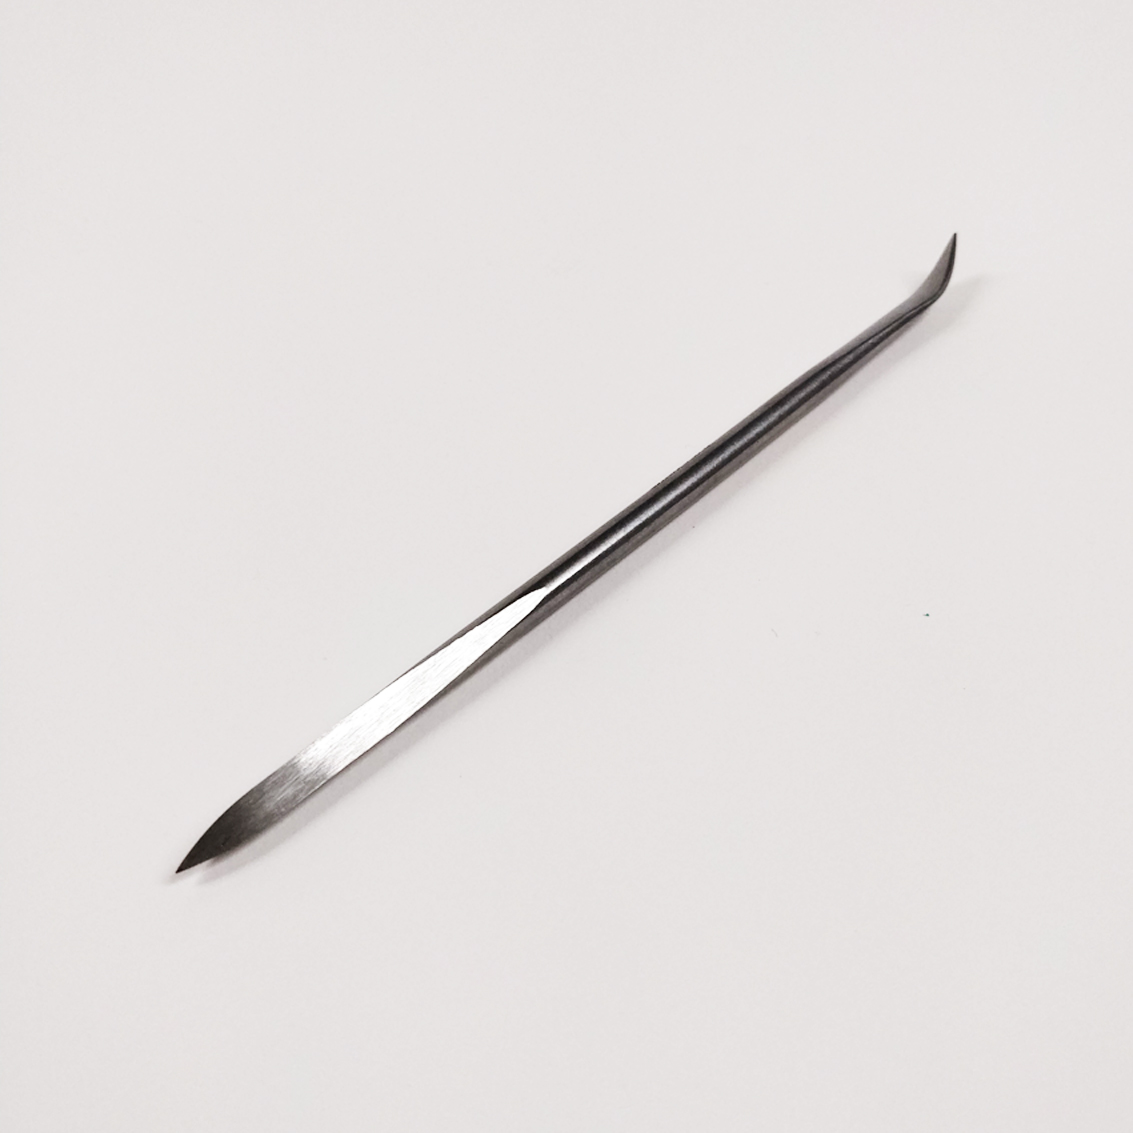 RGM Etching Tool, Curved Burnisher & Scraper, 601 Tip (RGE001)